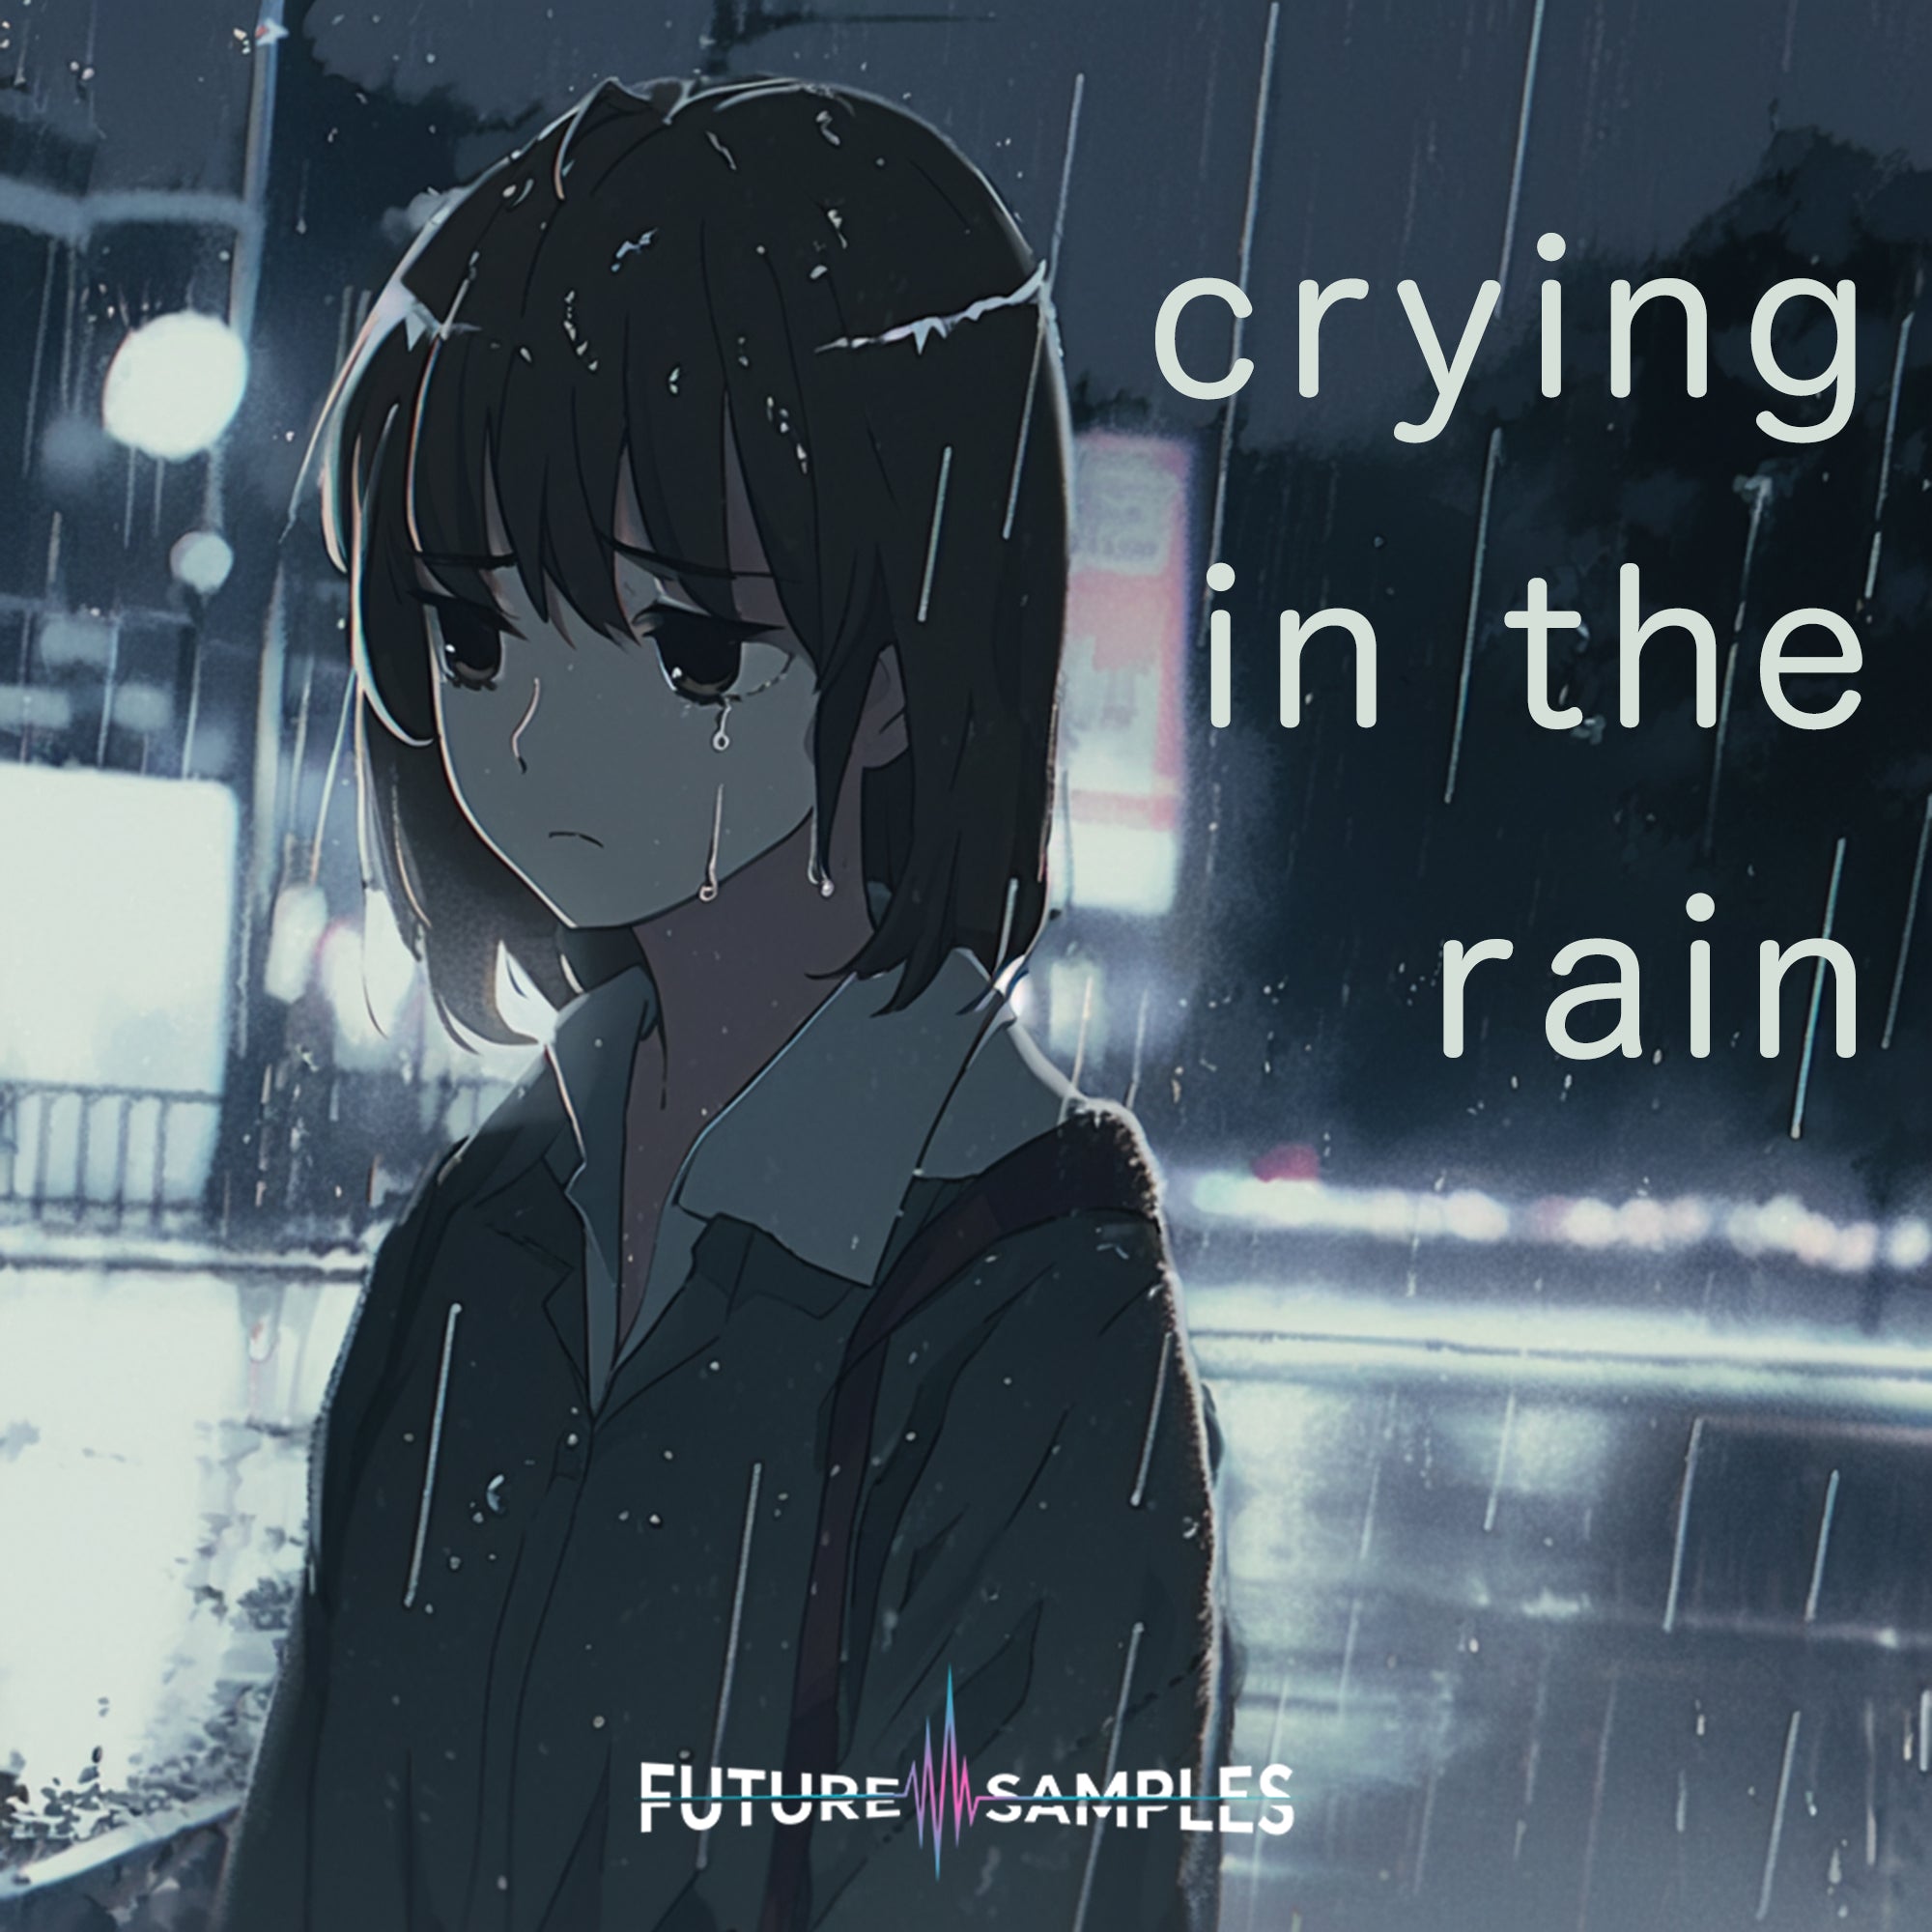 Sad Anime Girl in the Rain